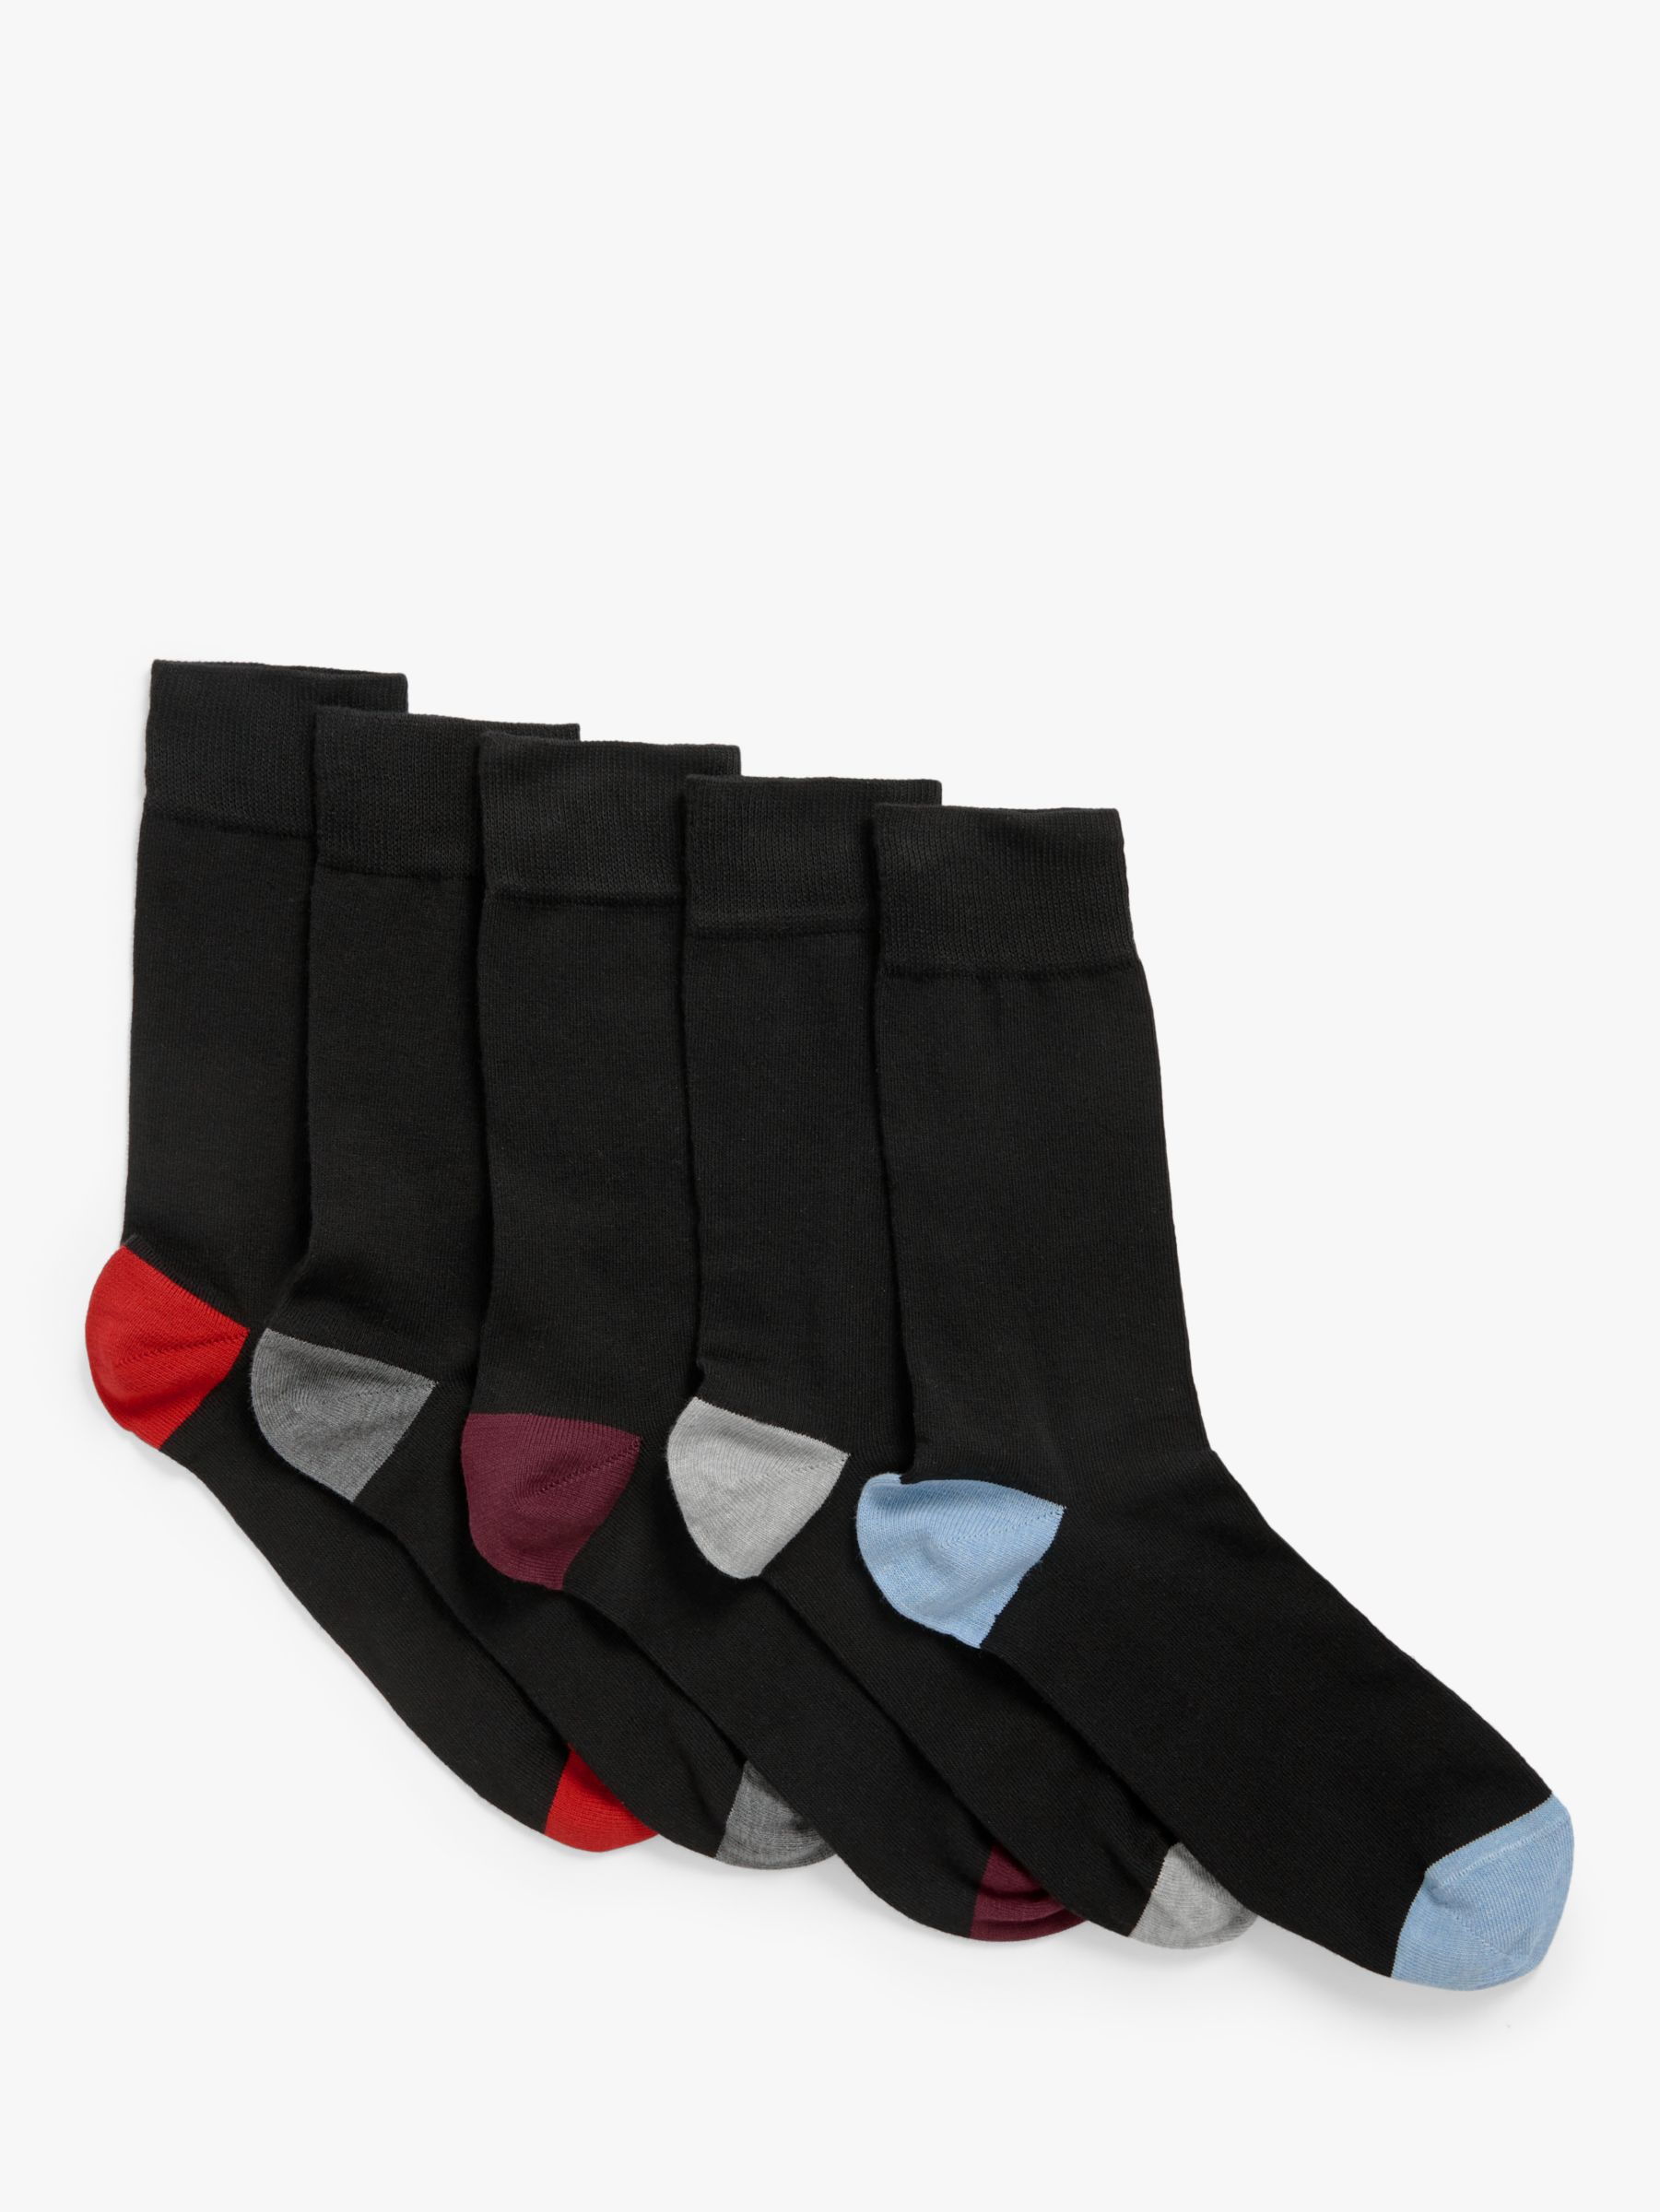 John Lewis Organic Cotton Rich Heel and Toe Men's Socks, Pack of 5, Black, S